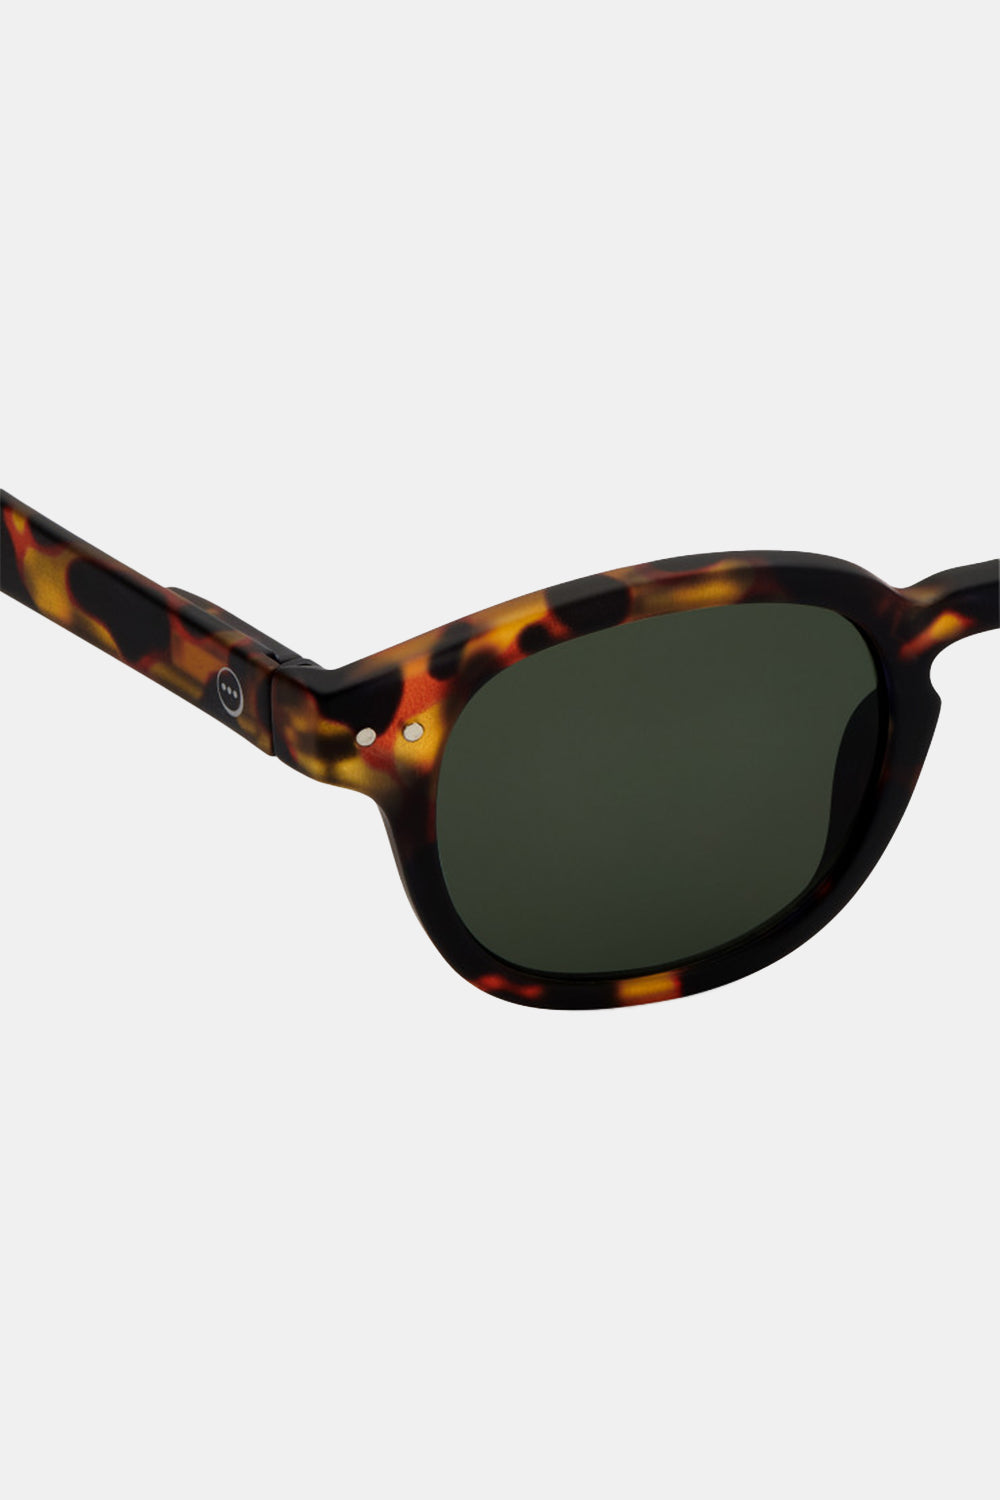 IZIPIZI #C Sunglasses (Green Tortoise)